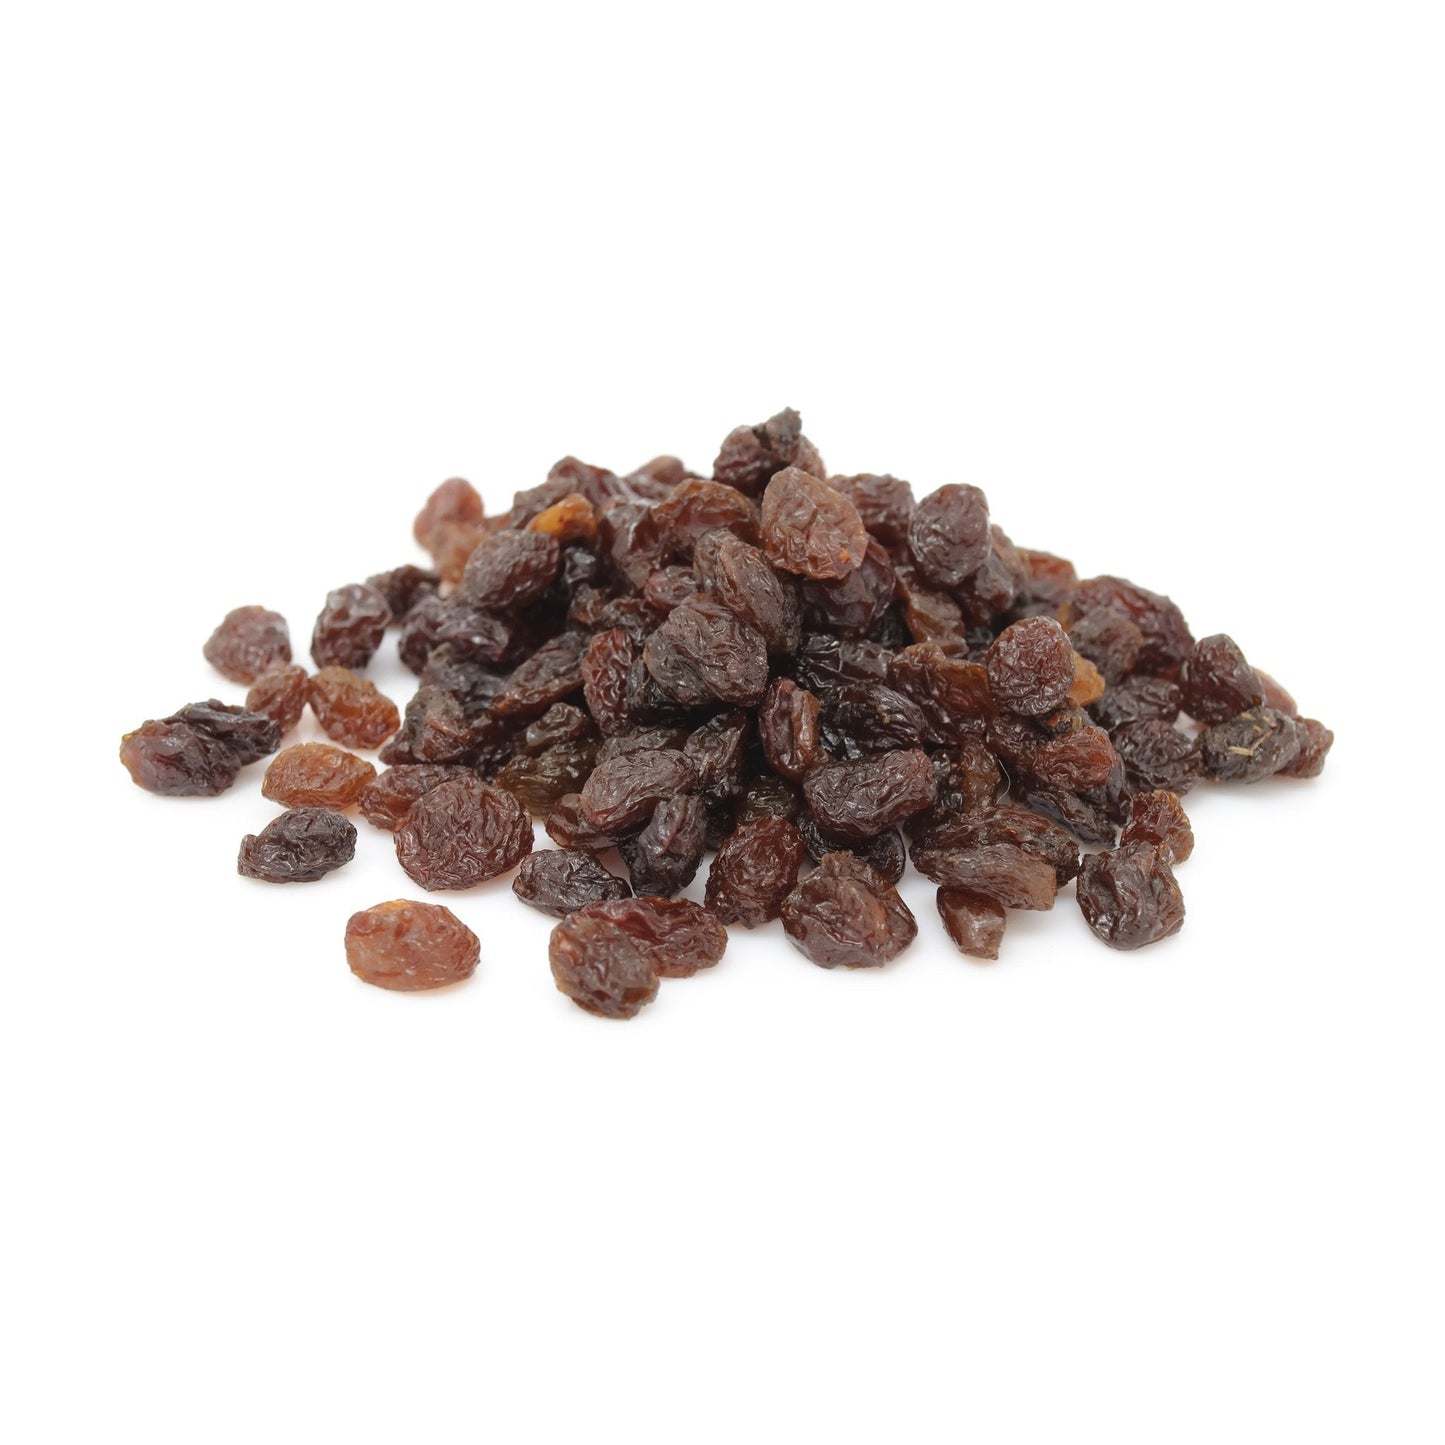 Chili Midget Raisins (Imported)